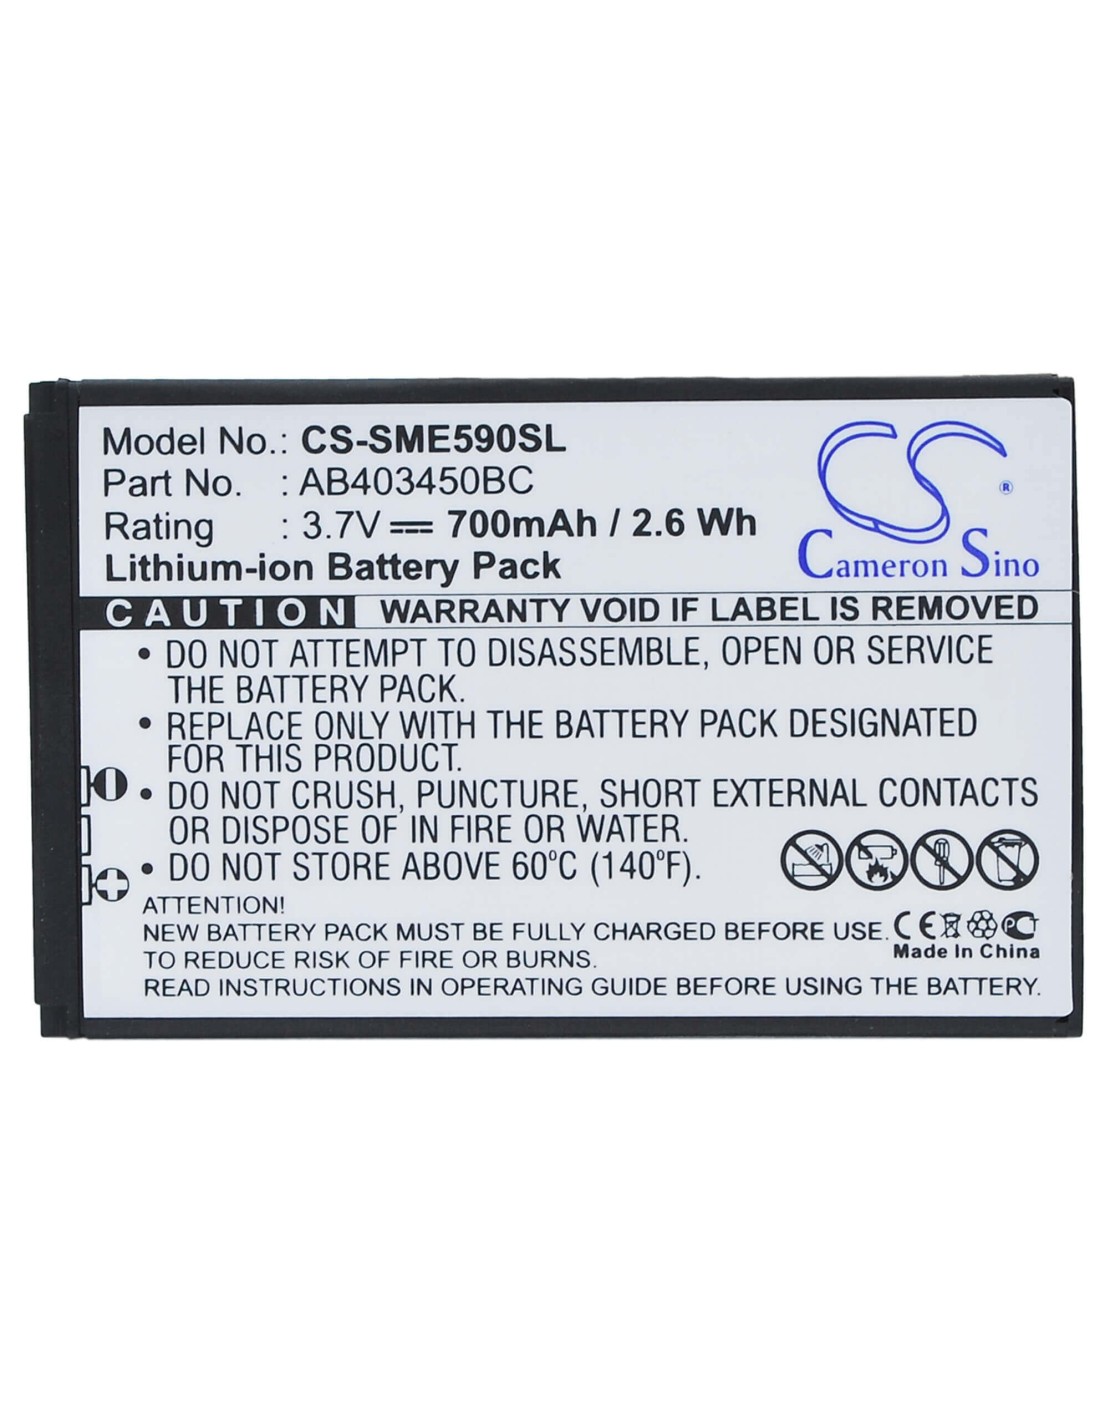 Battery for Samsung SGH-E590, SGH-E598, SGH-E790 3.7V, 700mAh - 2.59Wh